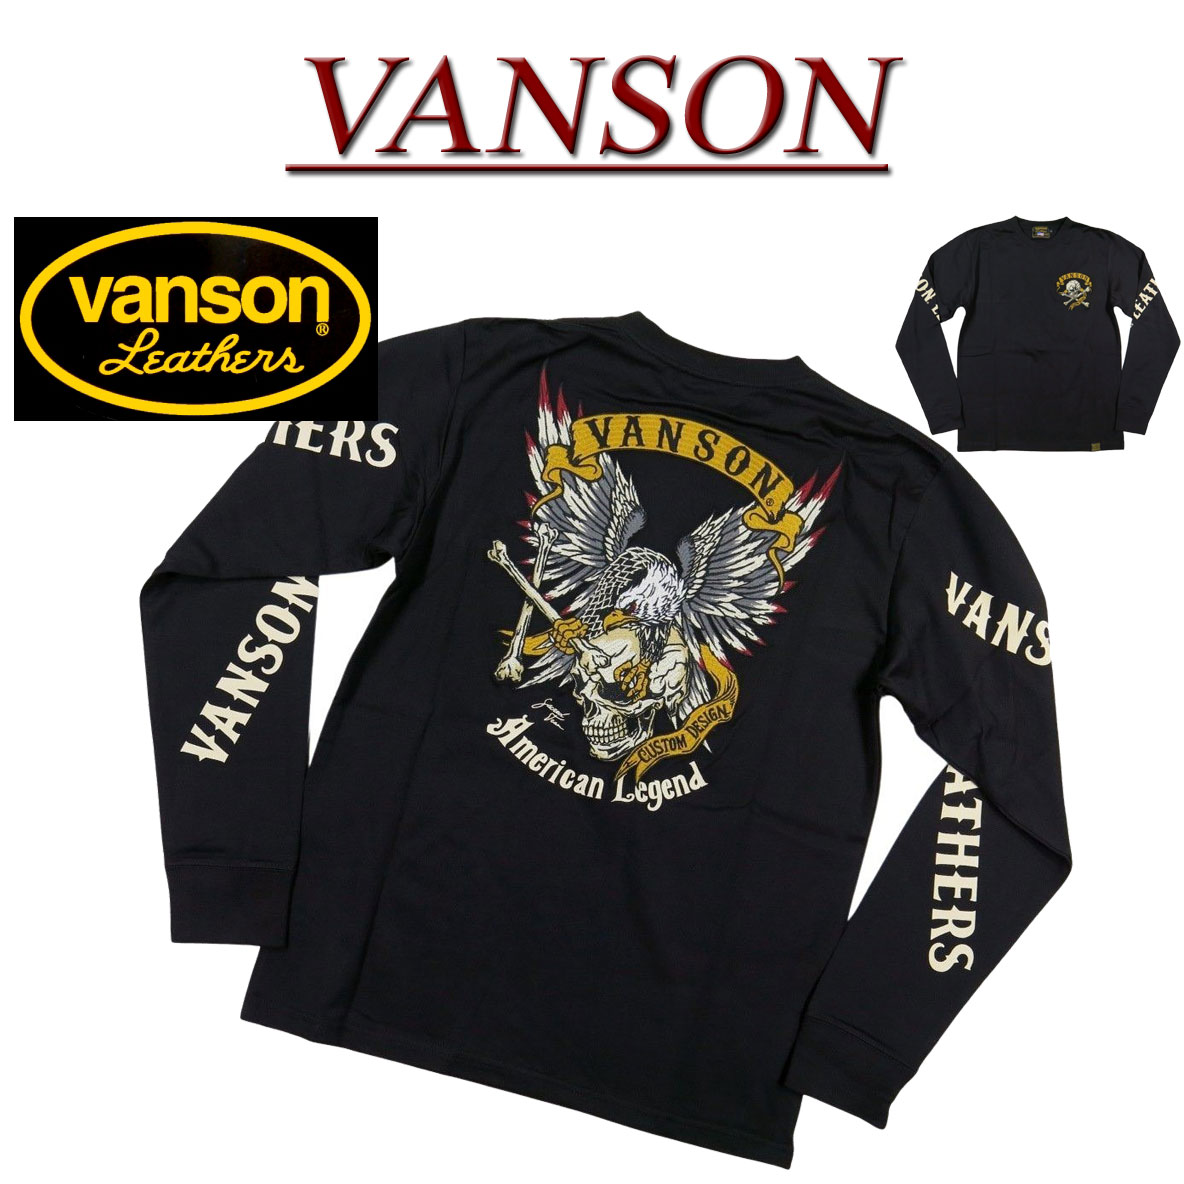  nc481 新品 VANSON スカル クロスボーン アメリカンイーグル刺繍 ロンT NVLT-2114 メンズ バンソン SKULL CROSSBONE AMERICAN EAGLE LONG SLEEVES T-SHIRT ドクロ 長袖 Tシャツ ヴァンソン ロンティー 